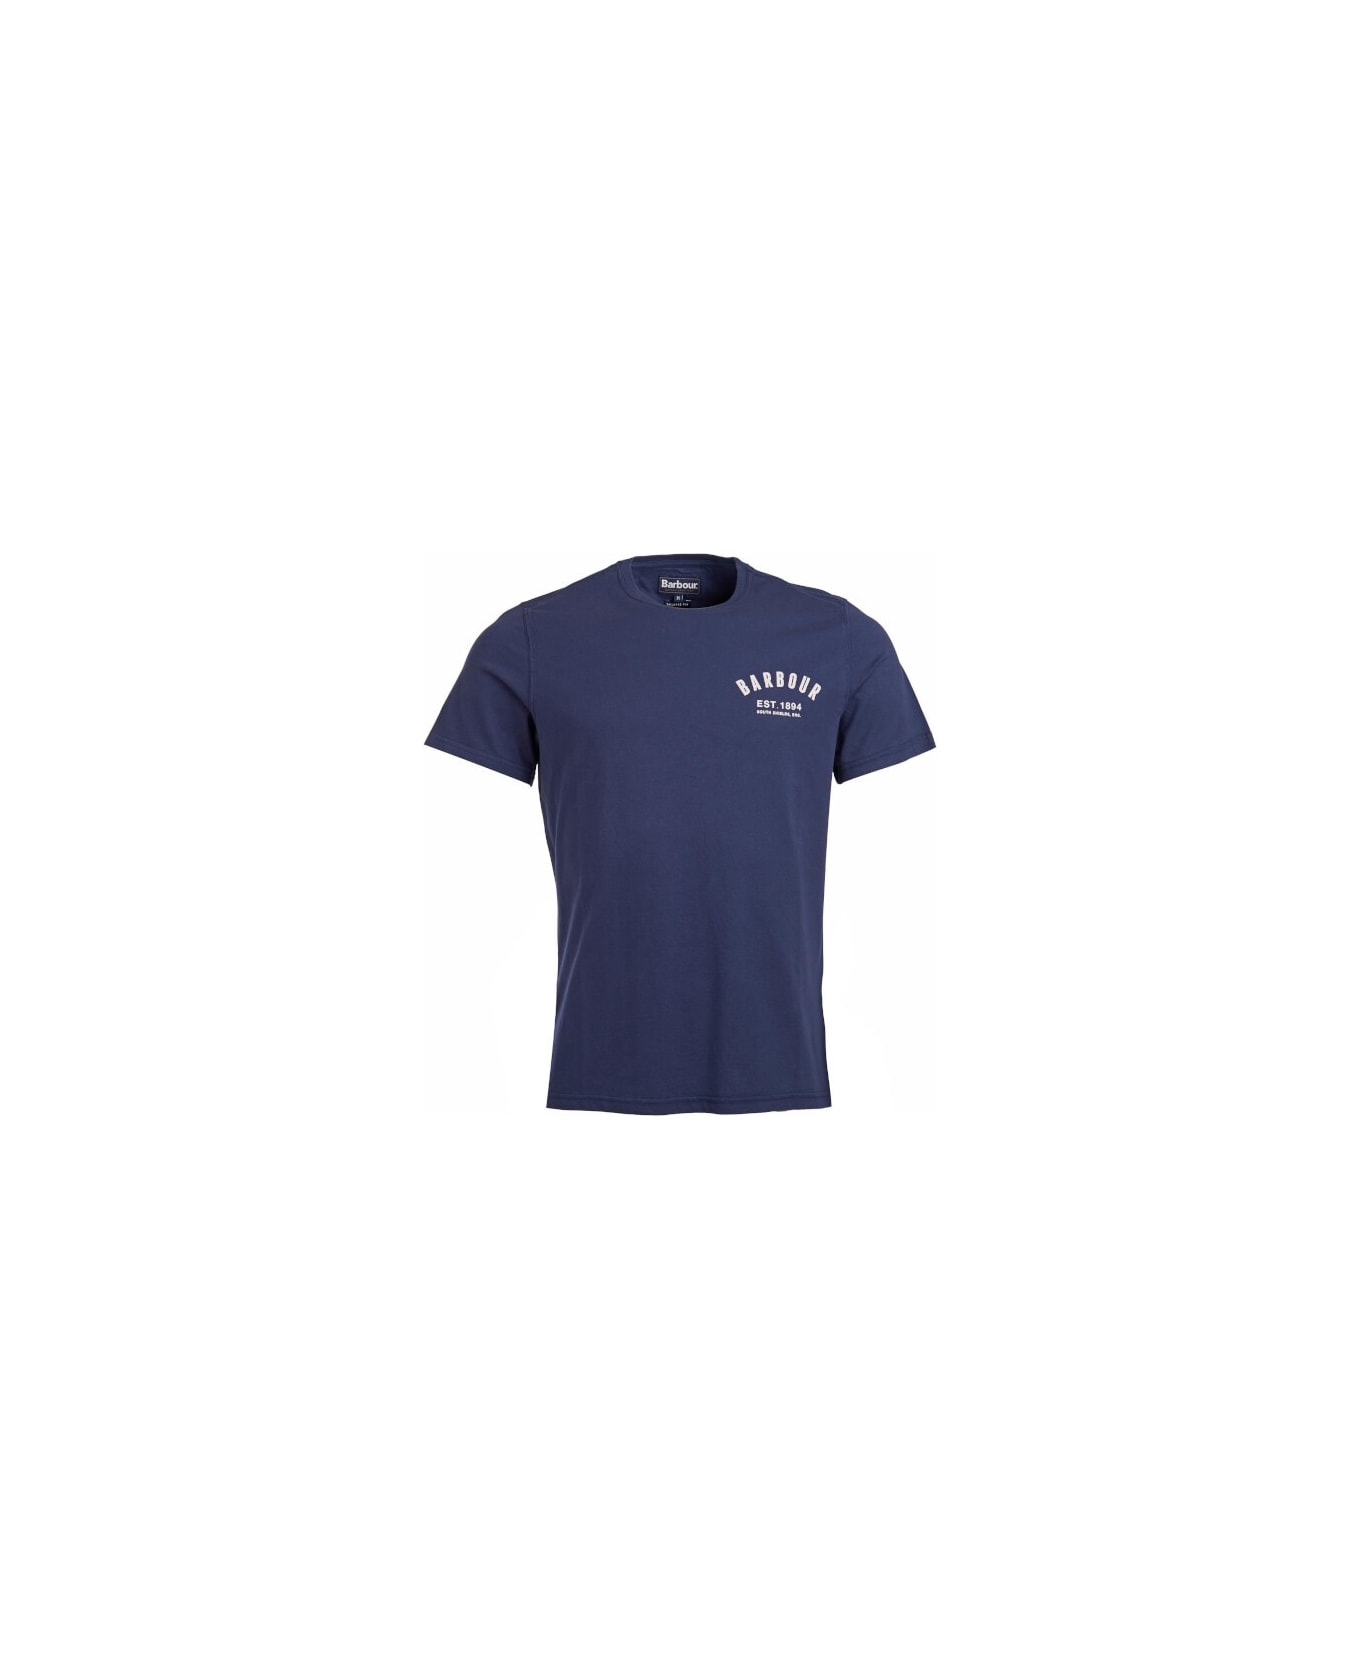 Barbour Preppy T-shirt - Navy